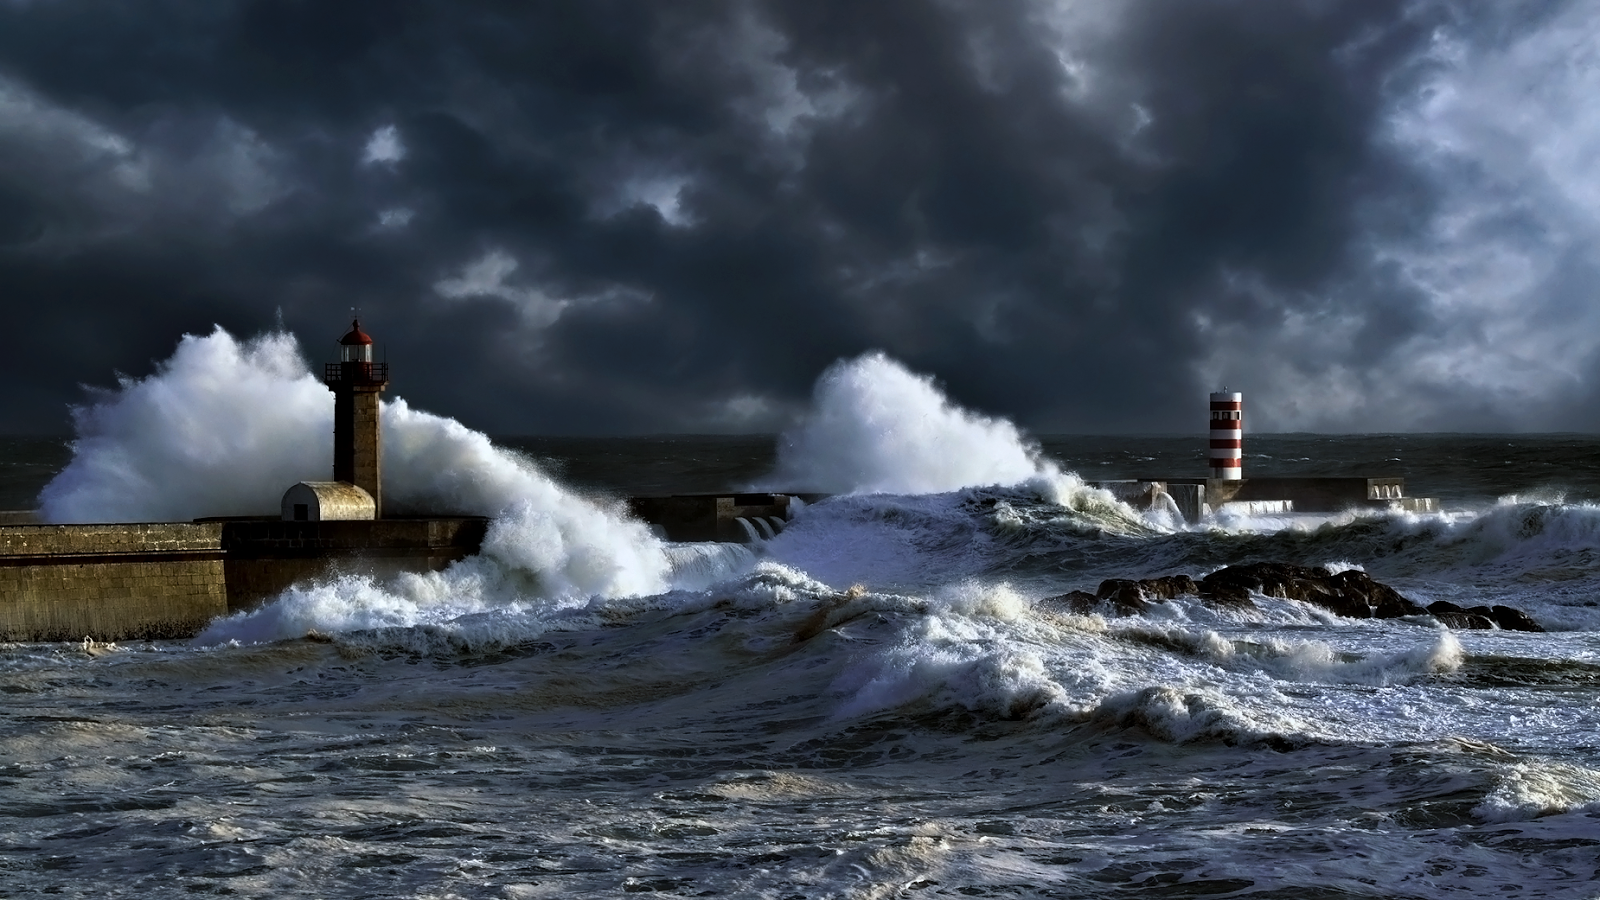 http://3.bp.blogspot.com/-zeB8ba4iZaU/USOox8jonqI/AAAAAAAAEGU/rJCL27O5mW4/s1600/poes-atlantic-sea-storm-wall-inkbluesky.png